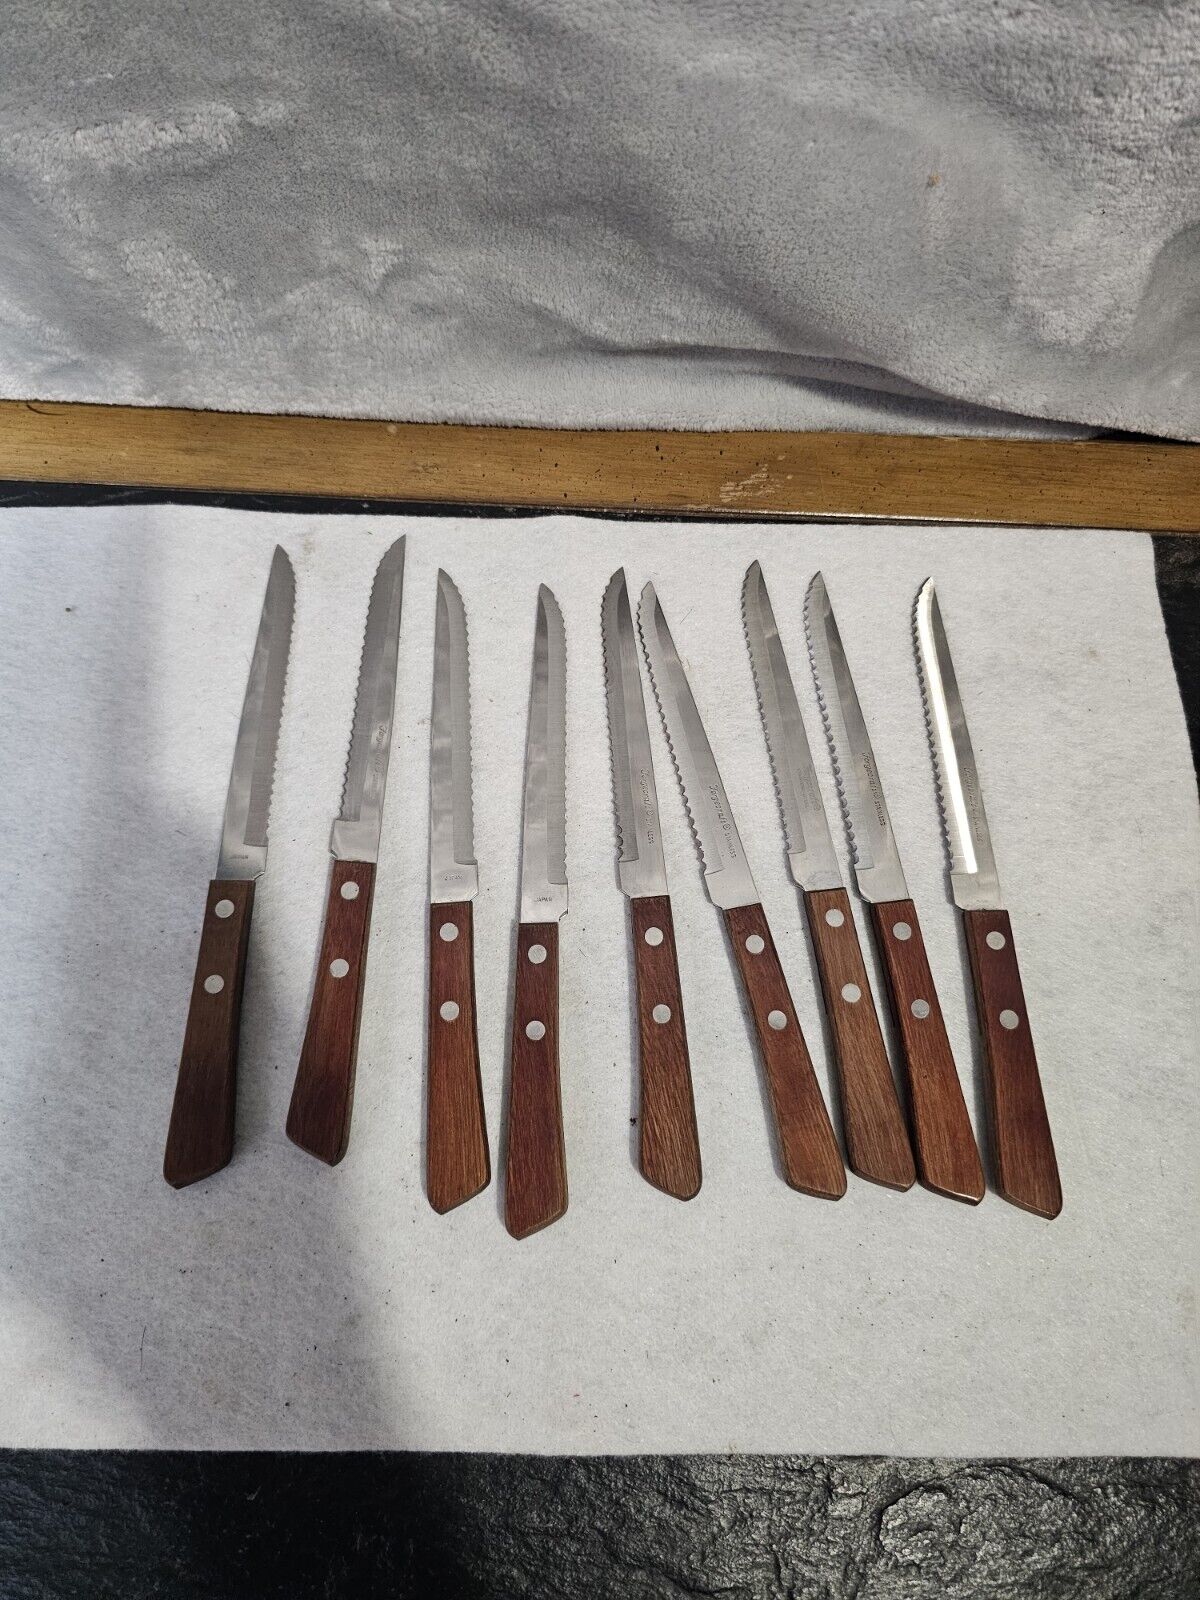 Vintage Forgecraft Japan Steak Knife Set of 9 Serrated Stainless Steel Wood